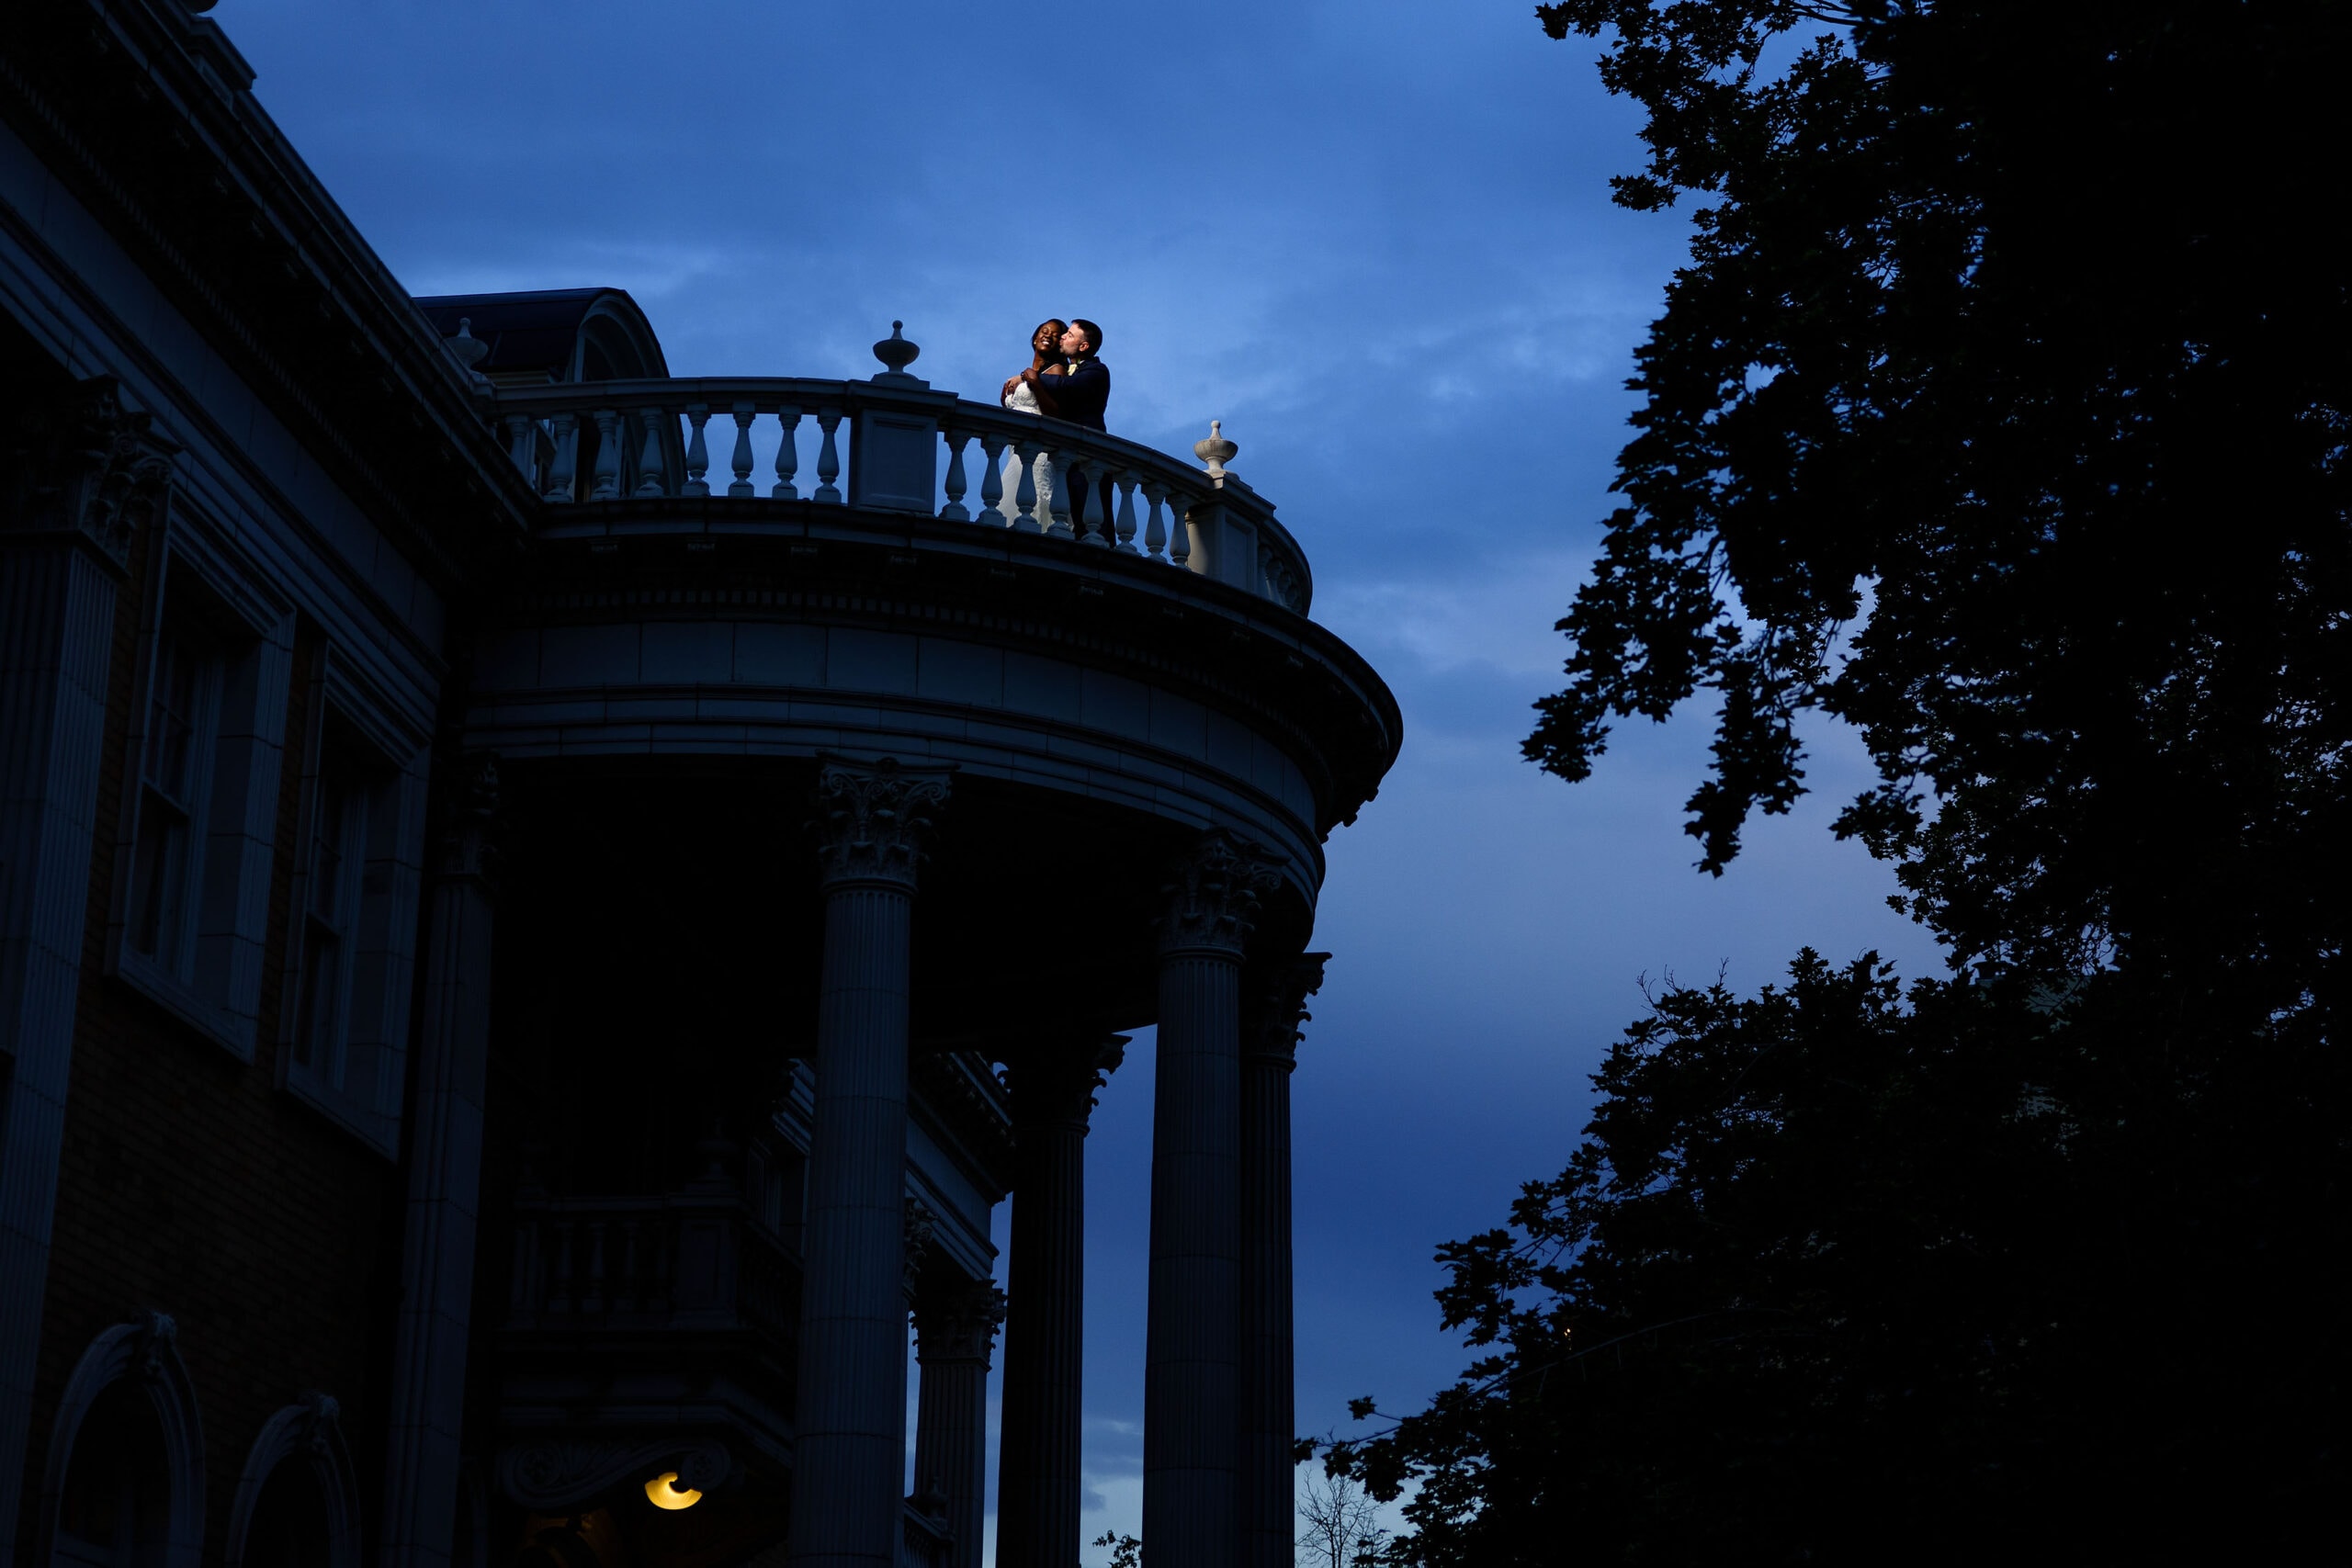 Shad kisses Aisha atop the balcony during twilight at Grant Humphrey’s Mansion